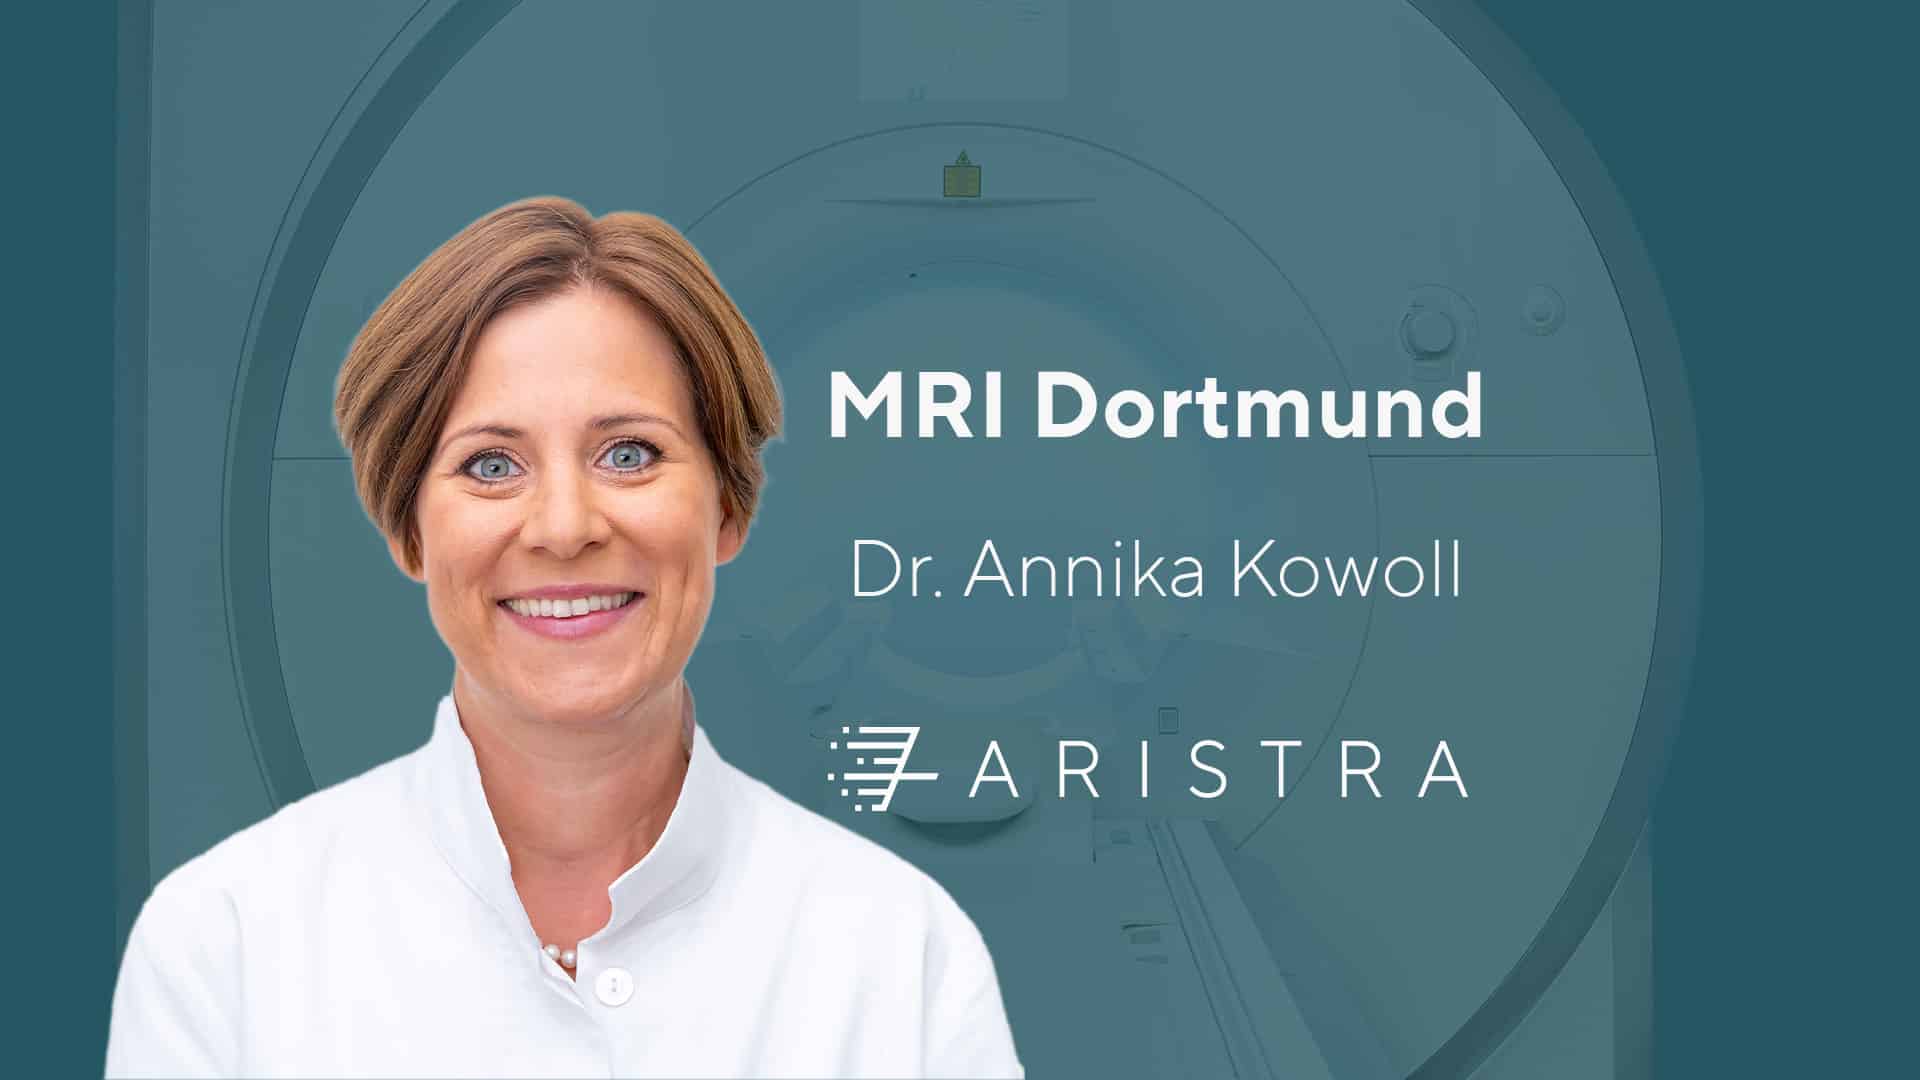 ARISTRA MRI Dortmund Featured Image